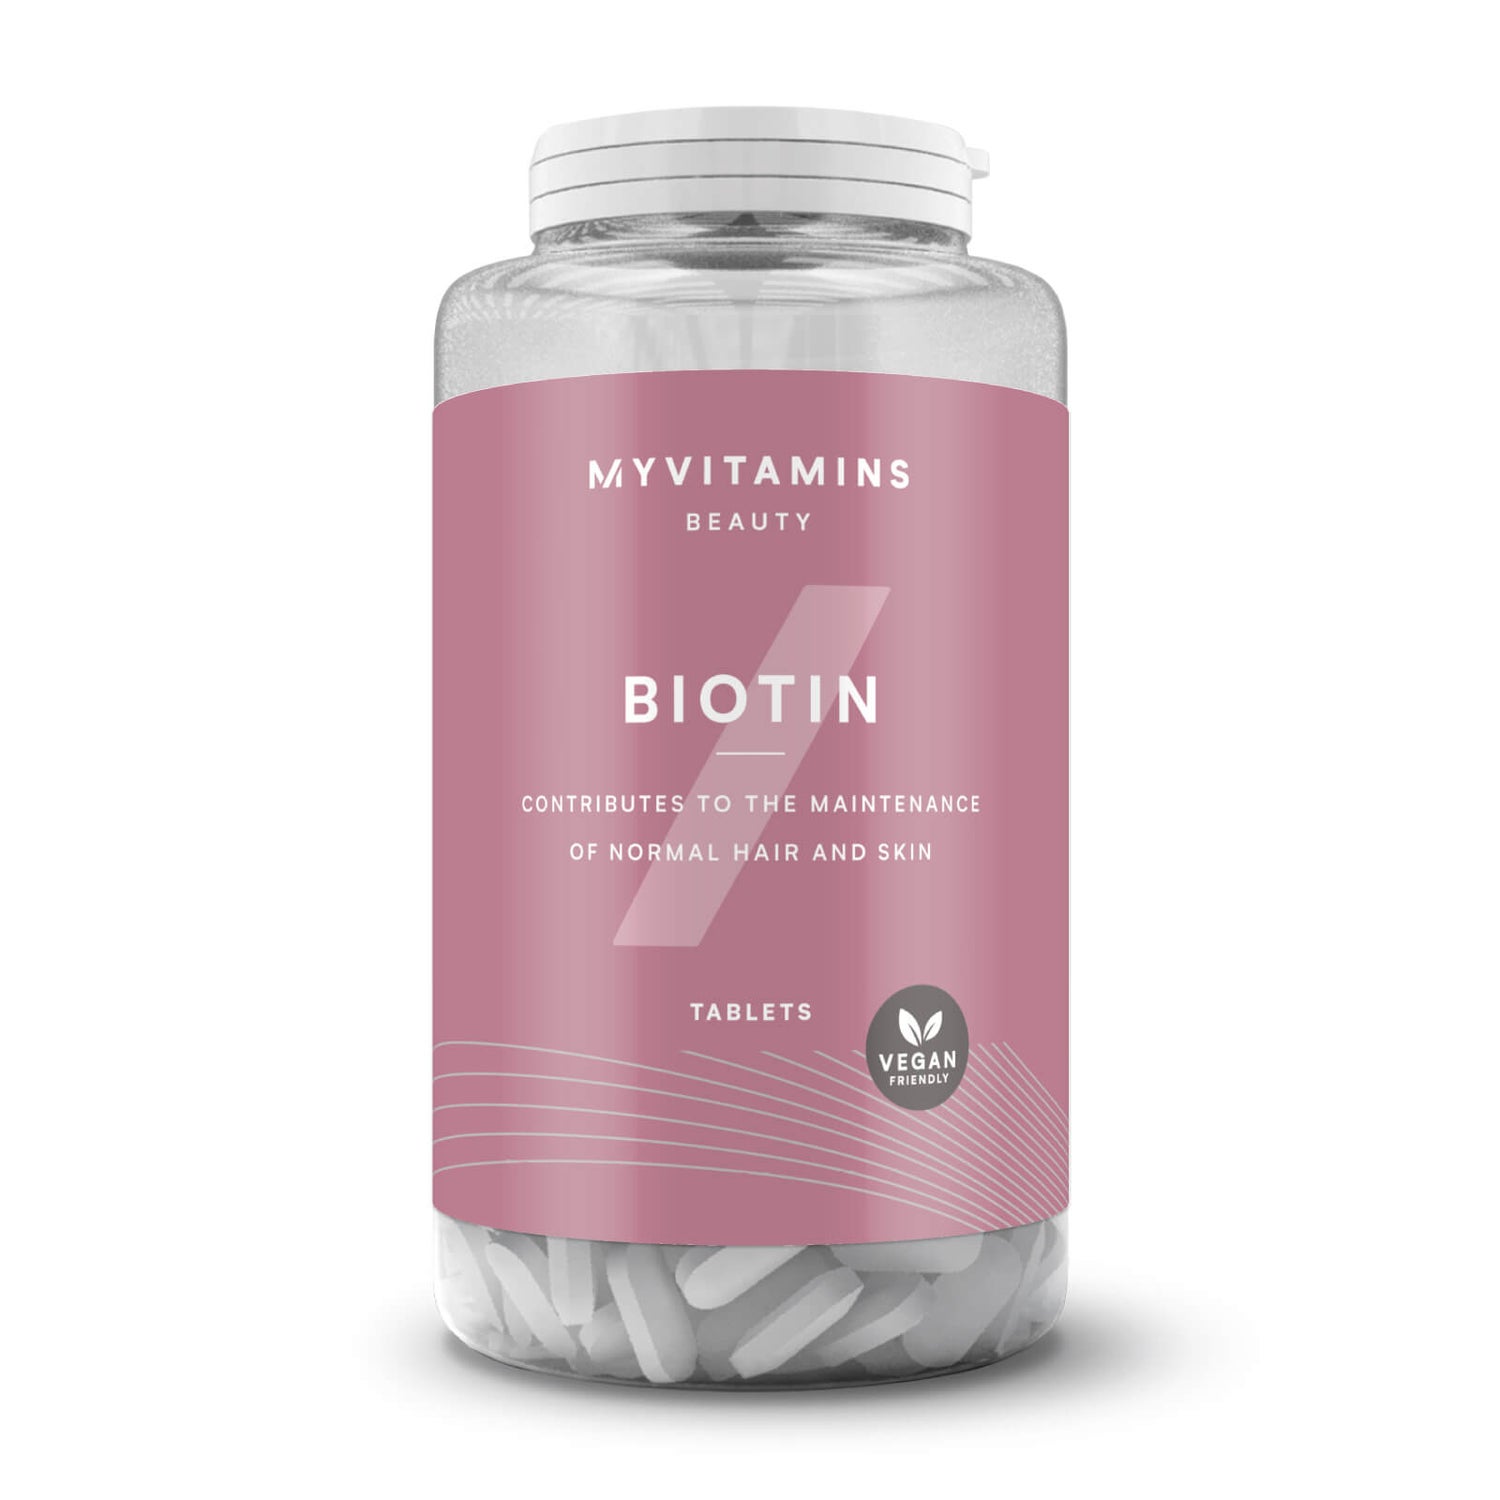 Myvitamins Biotin